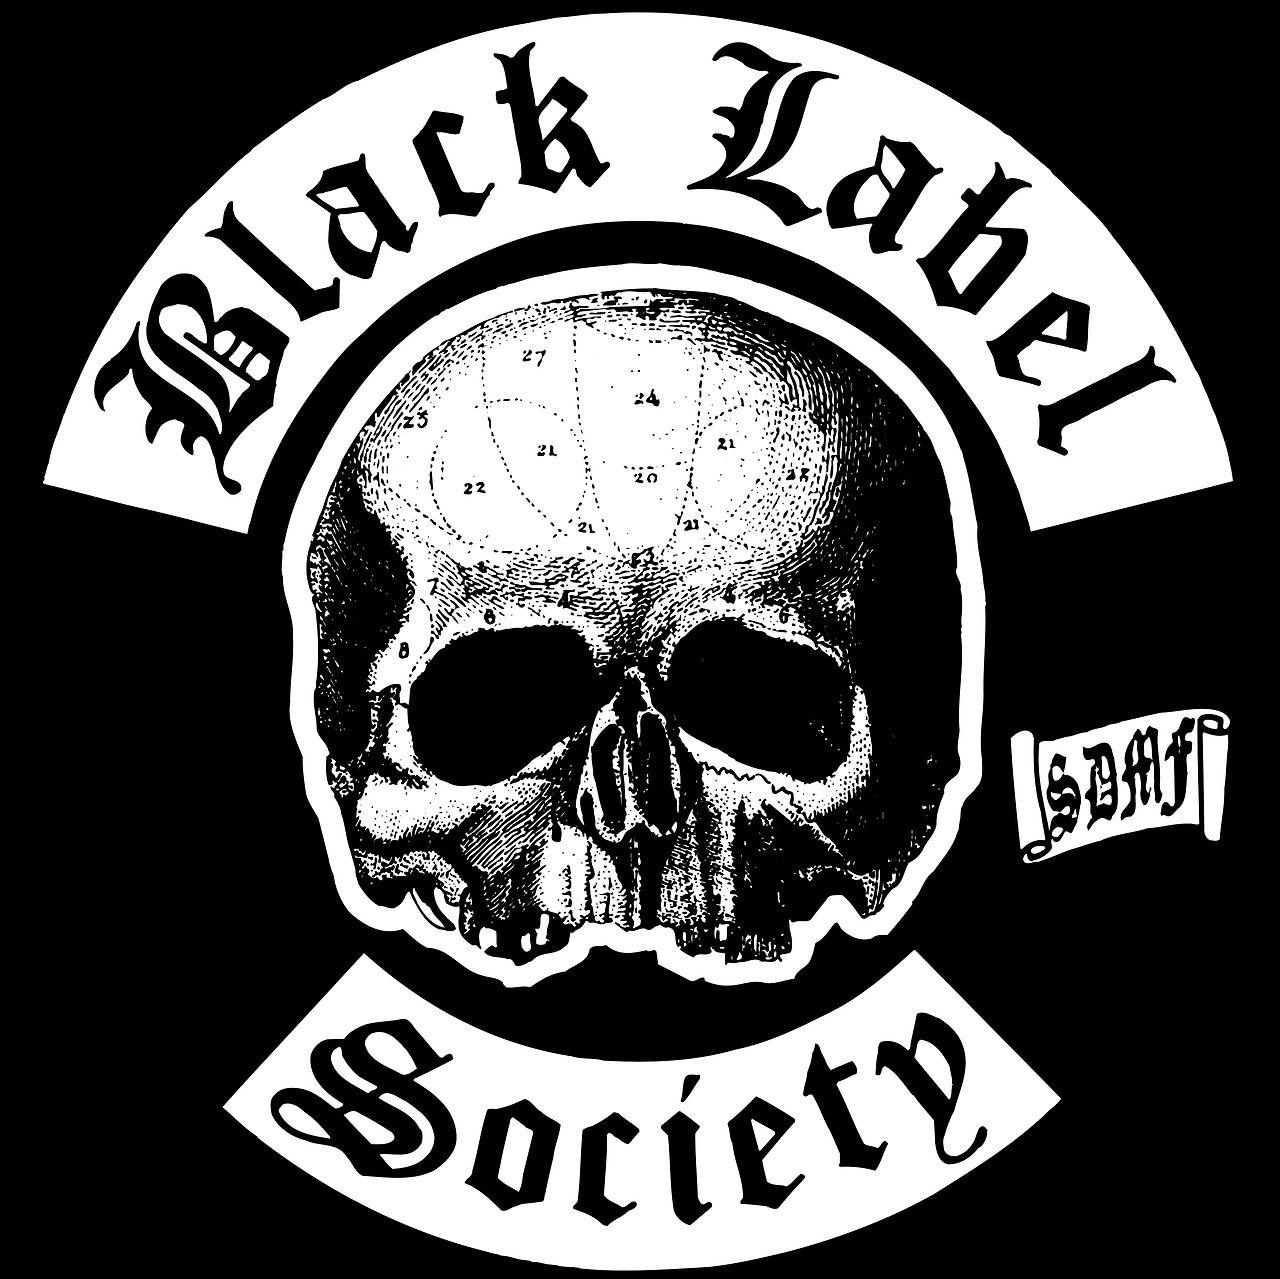 400x393px Black Label Society.09.2015